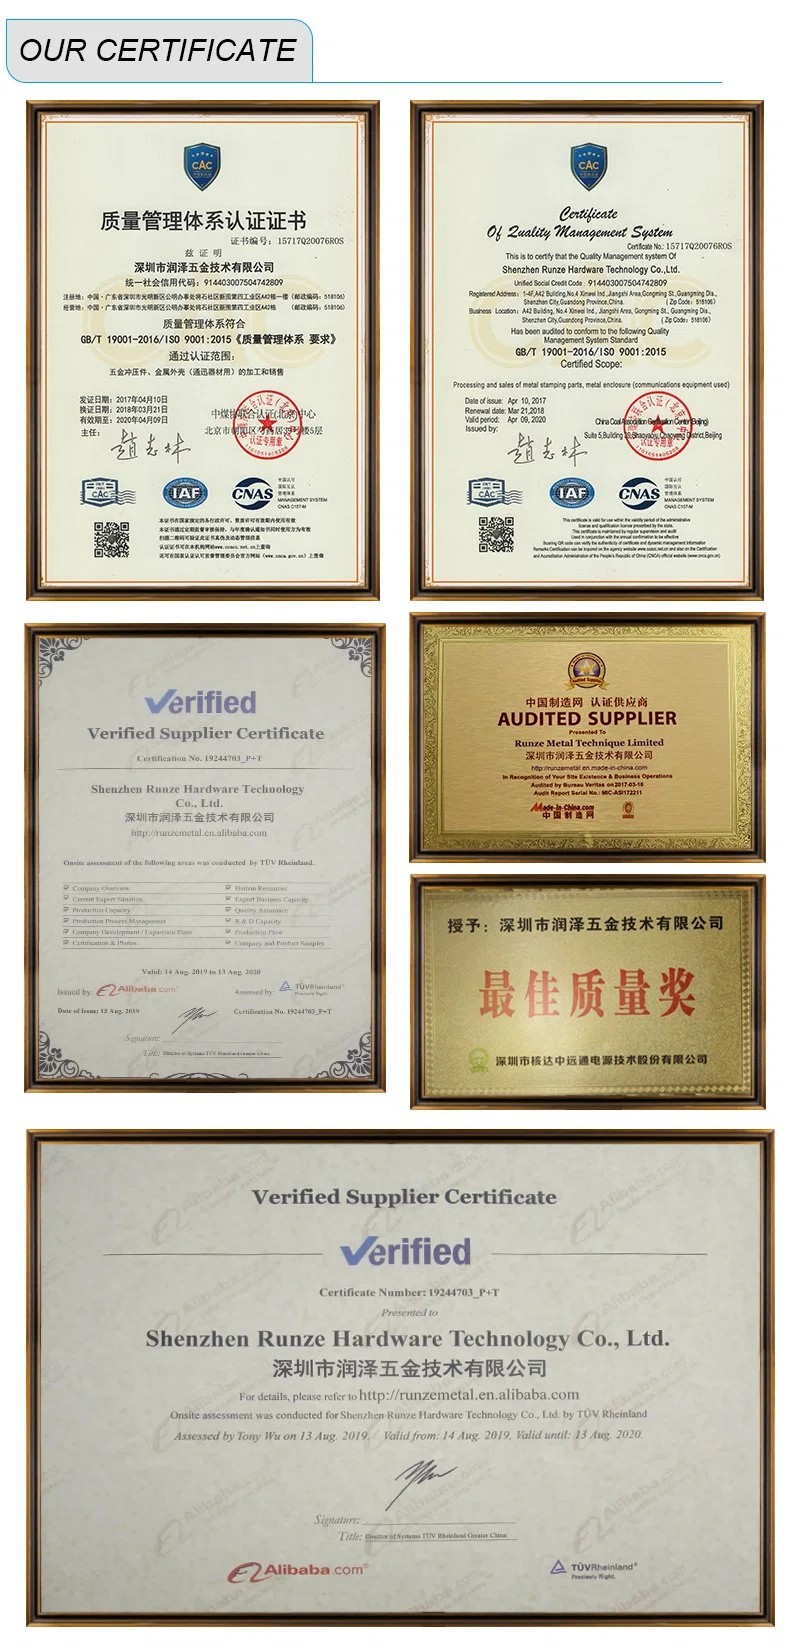 Low Price Customized Sheet Metal Intake Factory From China